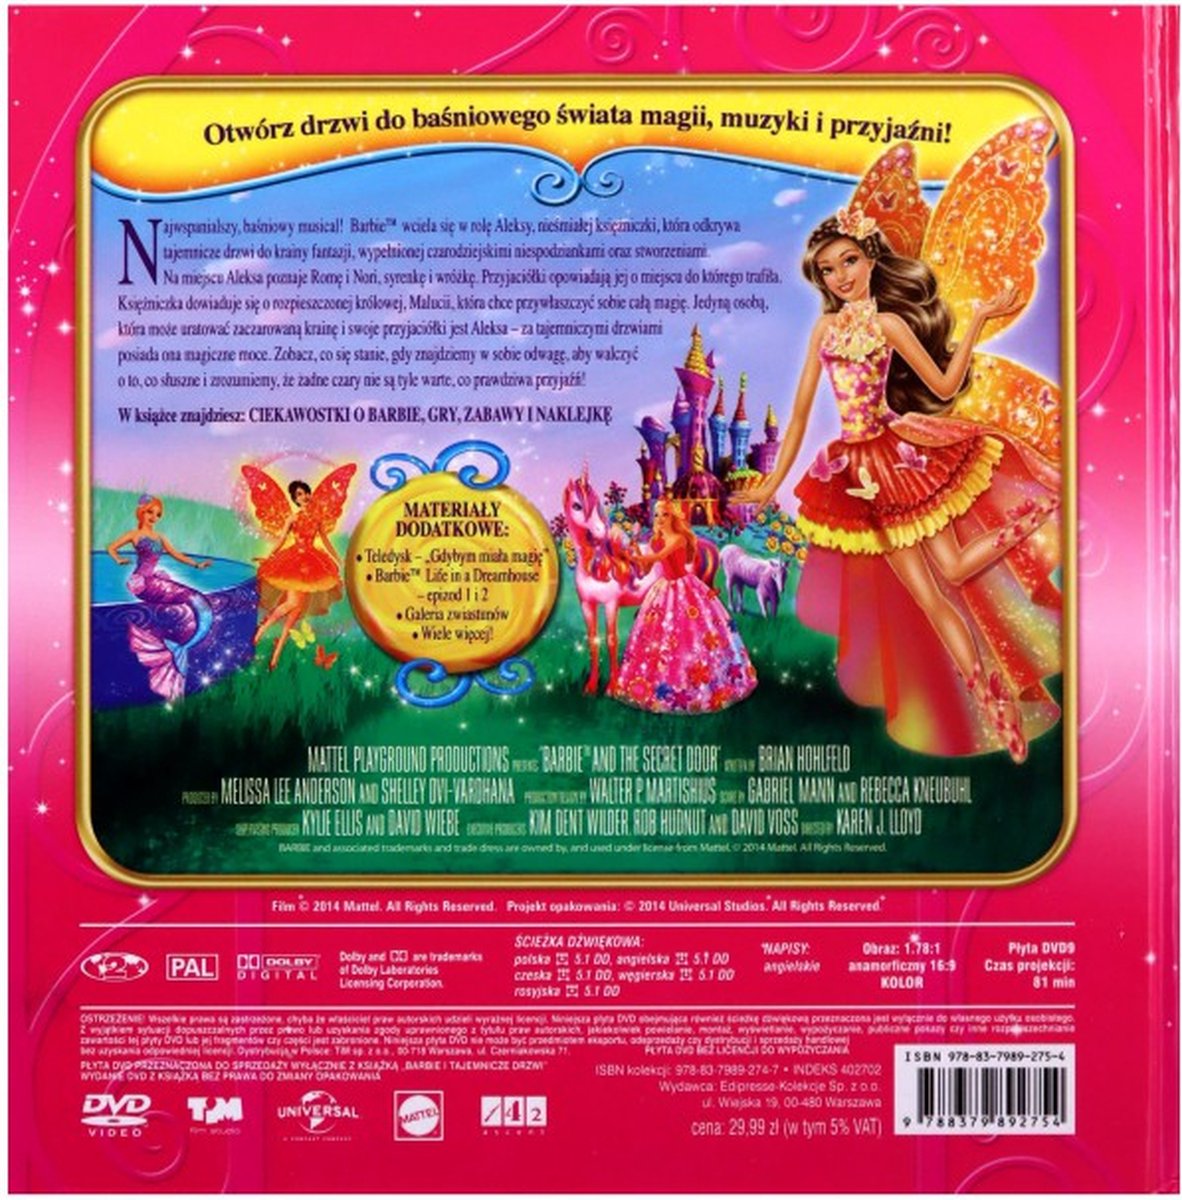 Barbie, princesse Raiponce [DVD] (DVD), Kelly Sheridan, DVD